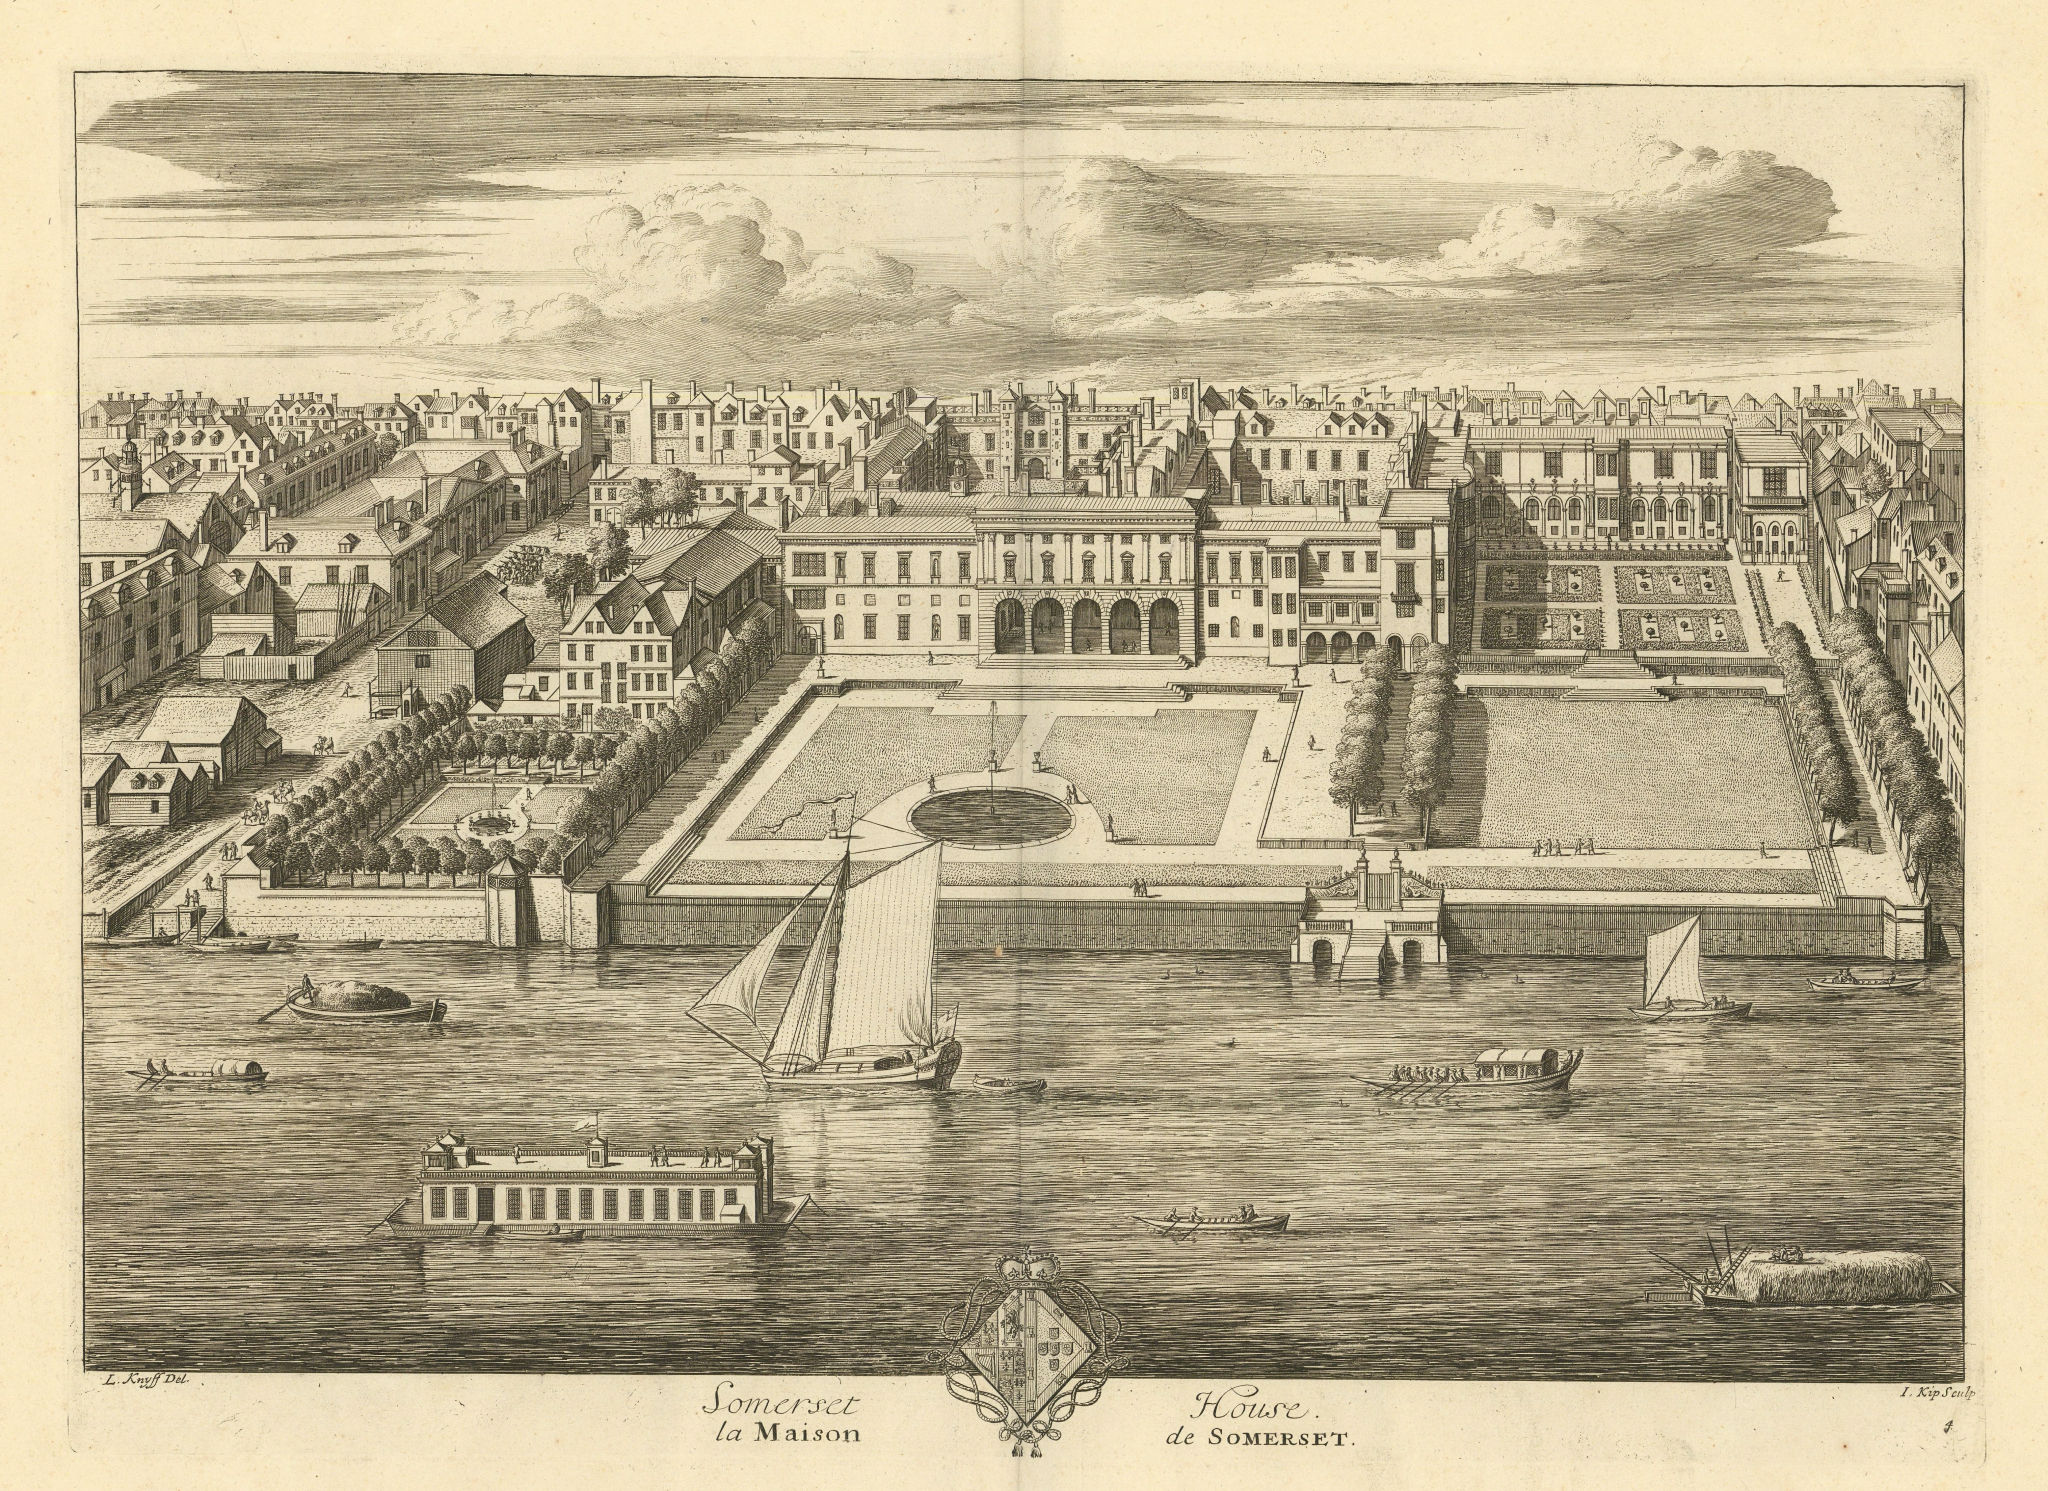 Somerset House / La Maison de Somerset by KIP & KNYFF. London 1709 old print